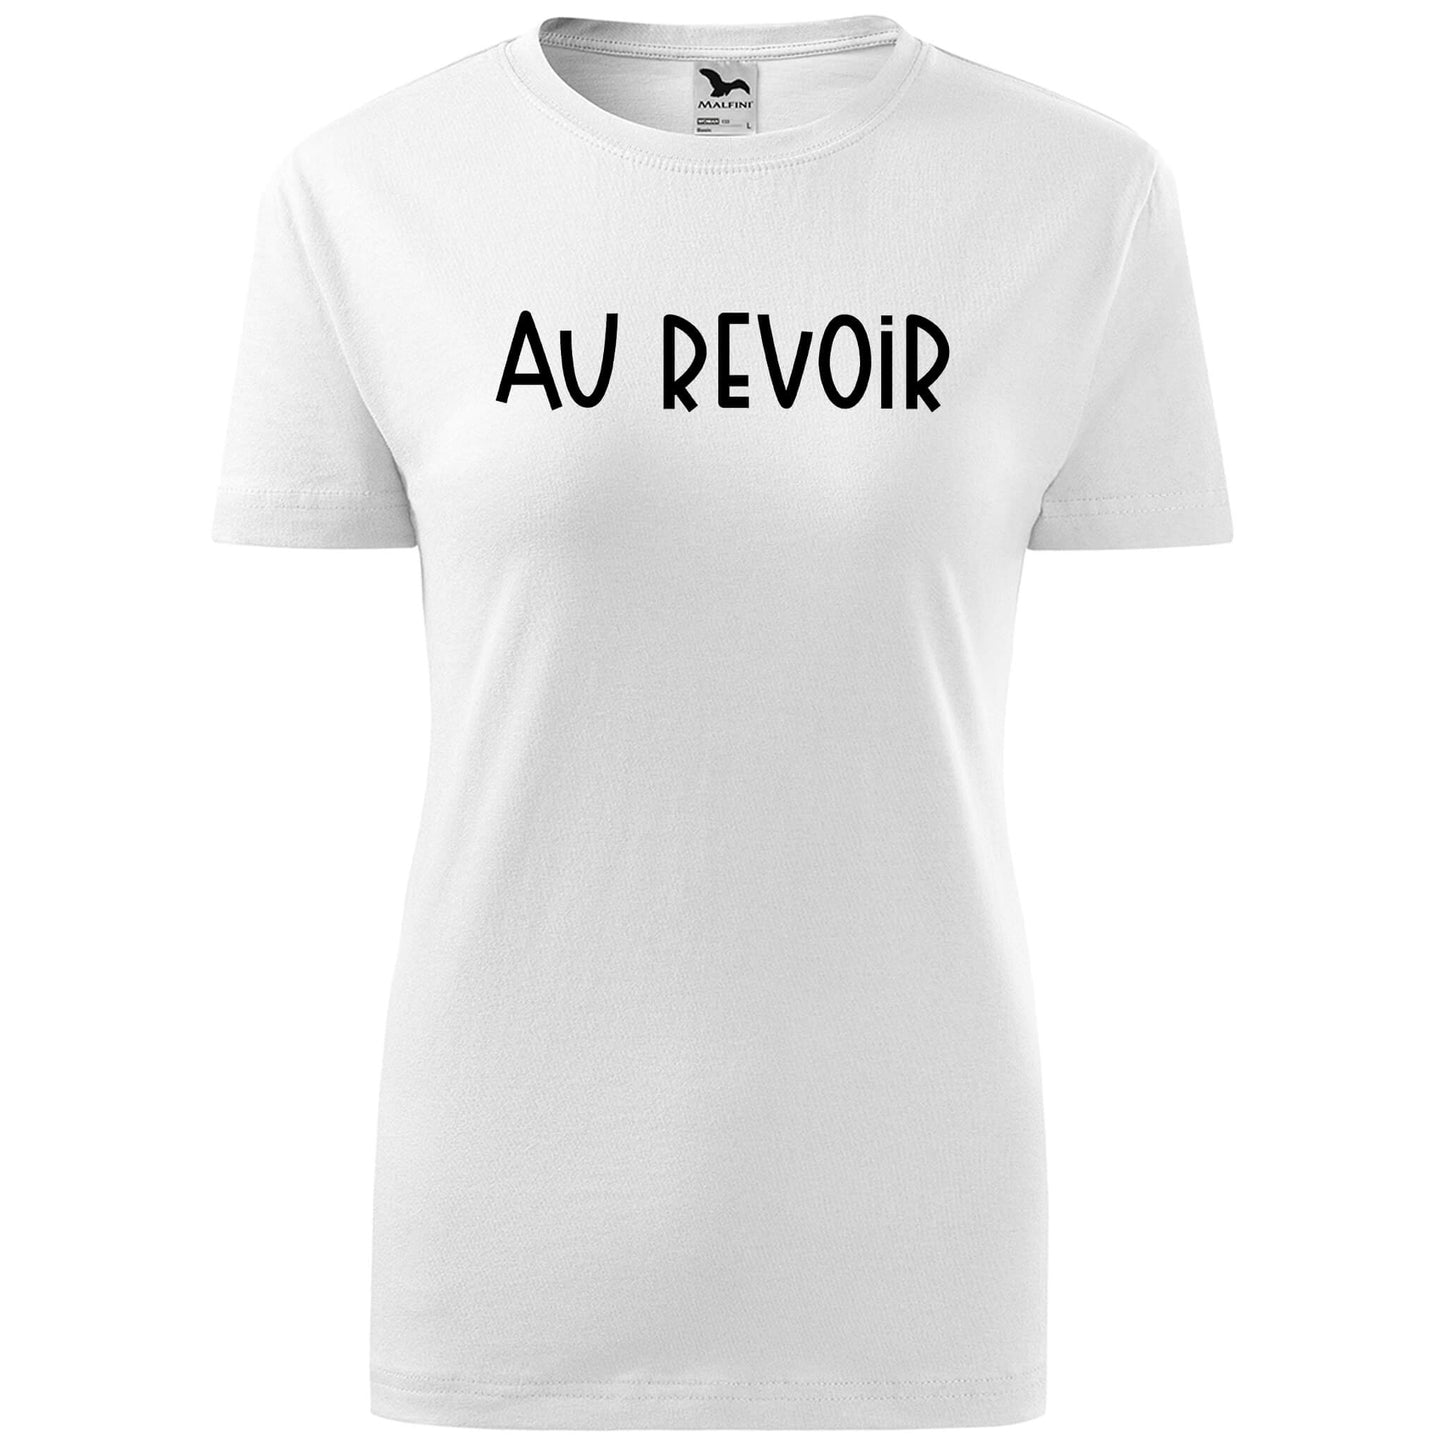 T-shirt - Au revoir - rvdesignprint